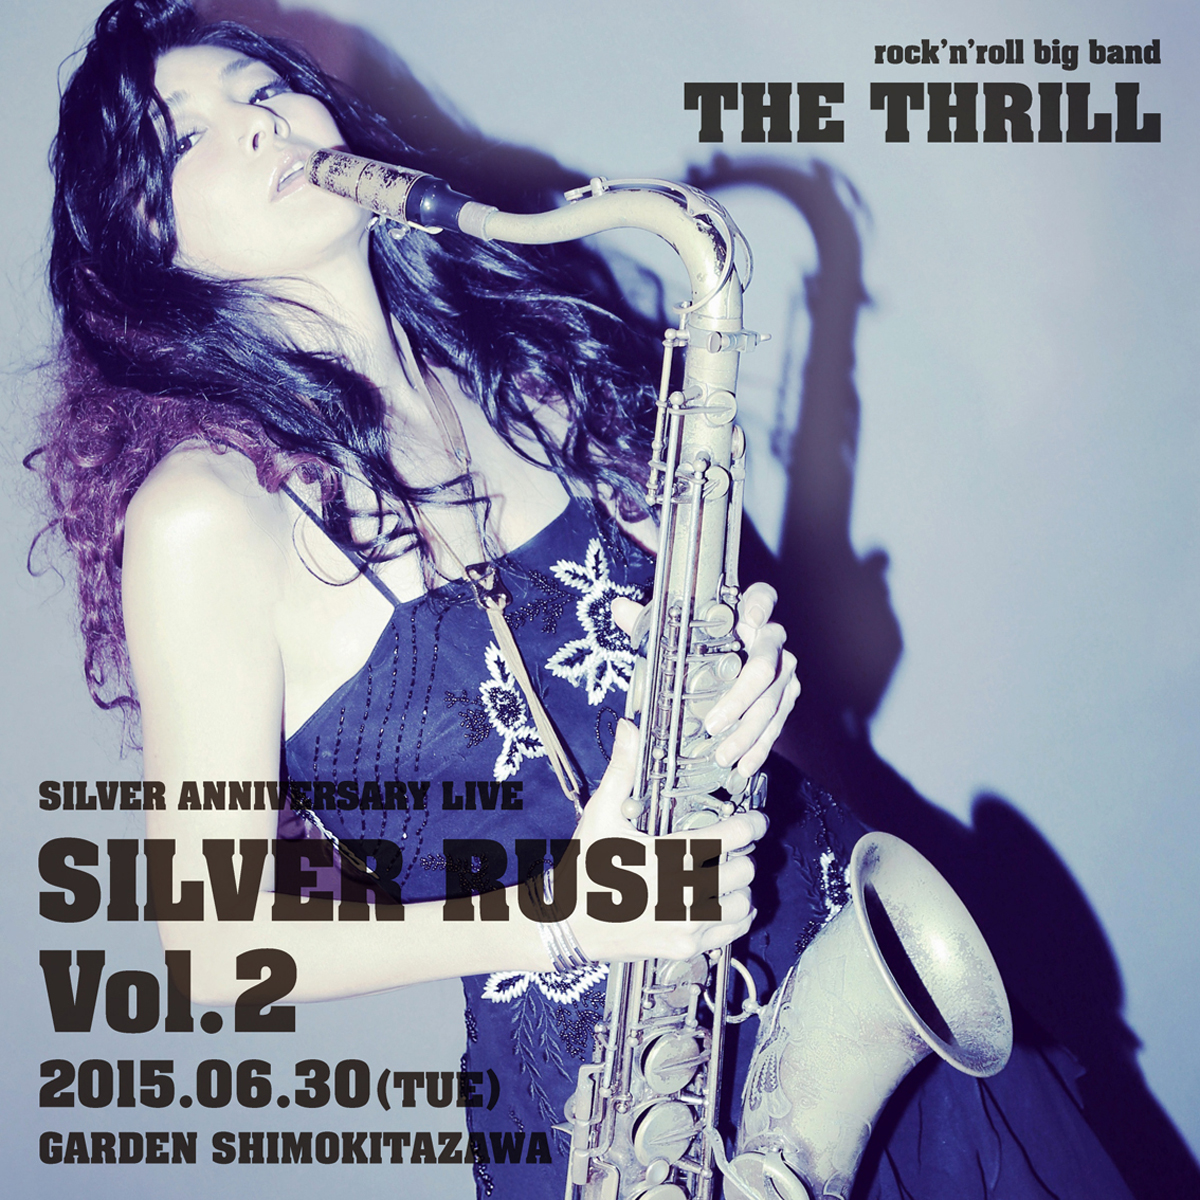 The Thrill “Silver Anniversary”